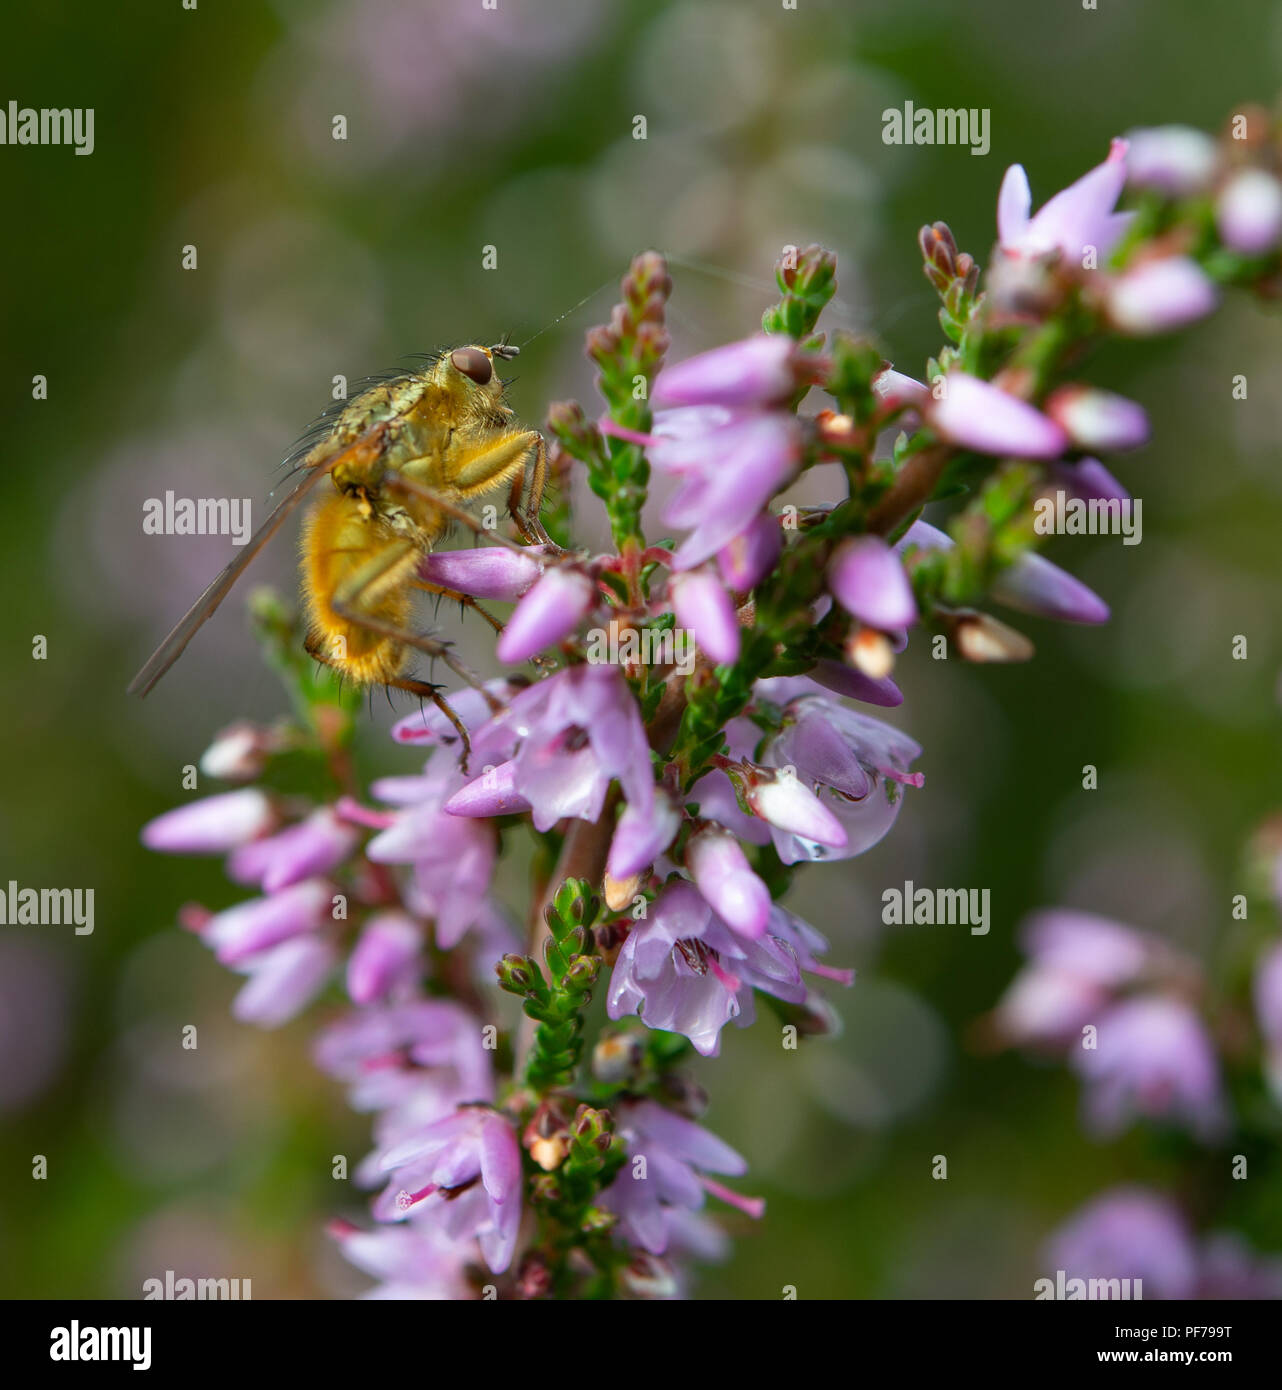 Fruit fly on common heather flowers Stock Photo